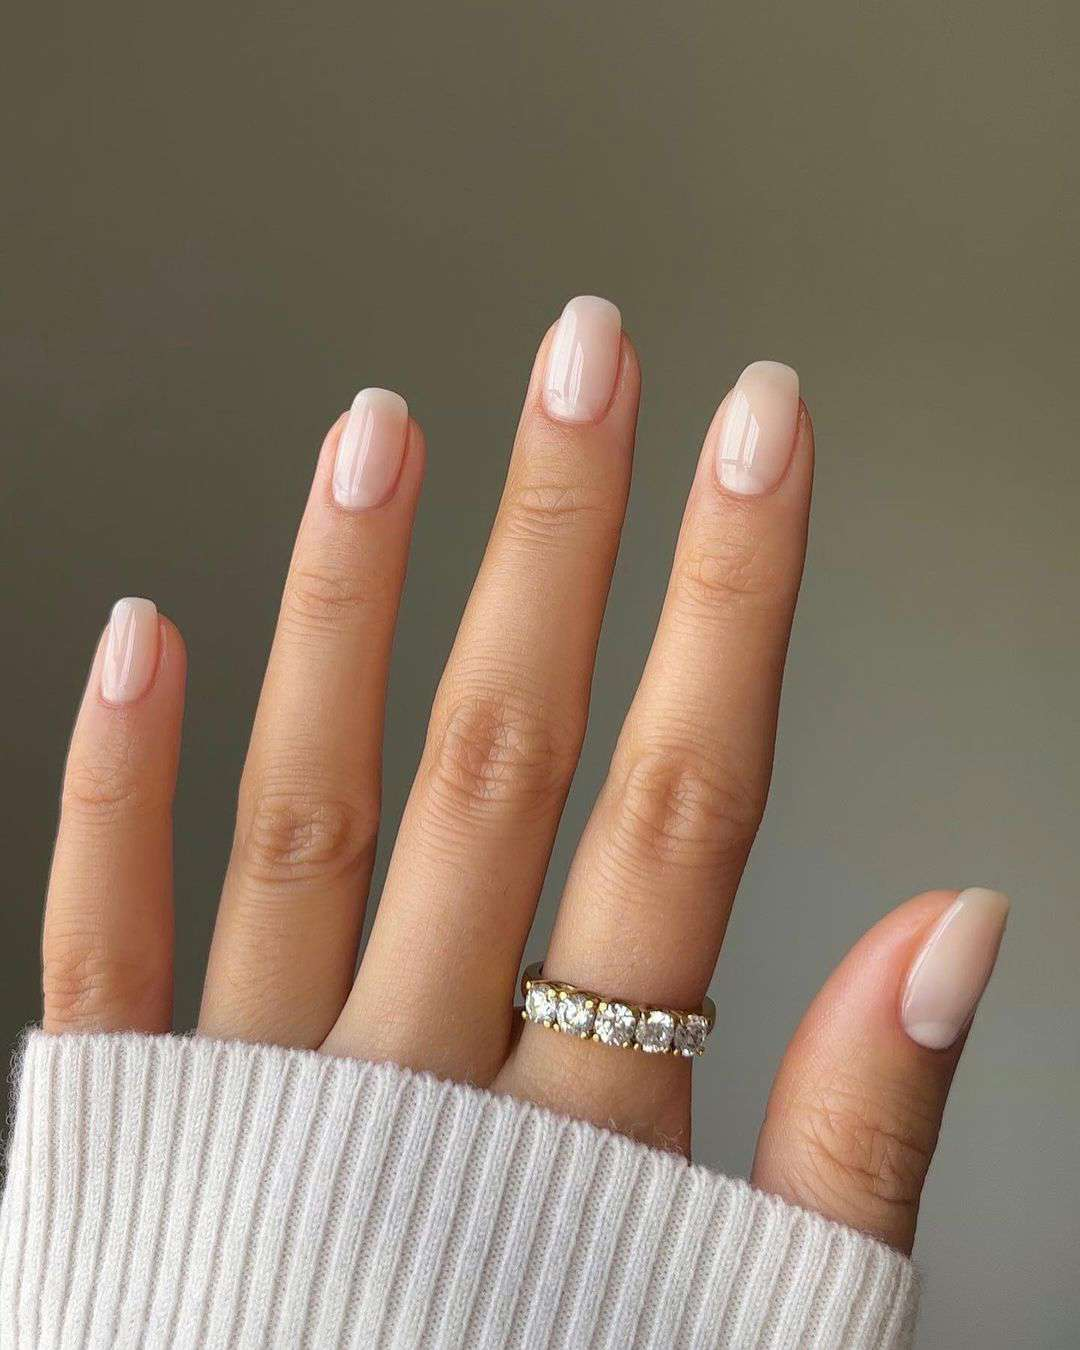 15 uñas permanentes bonitas para inspirarte: naturales